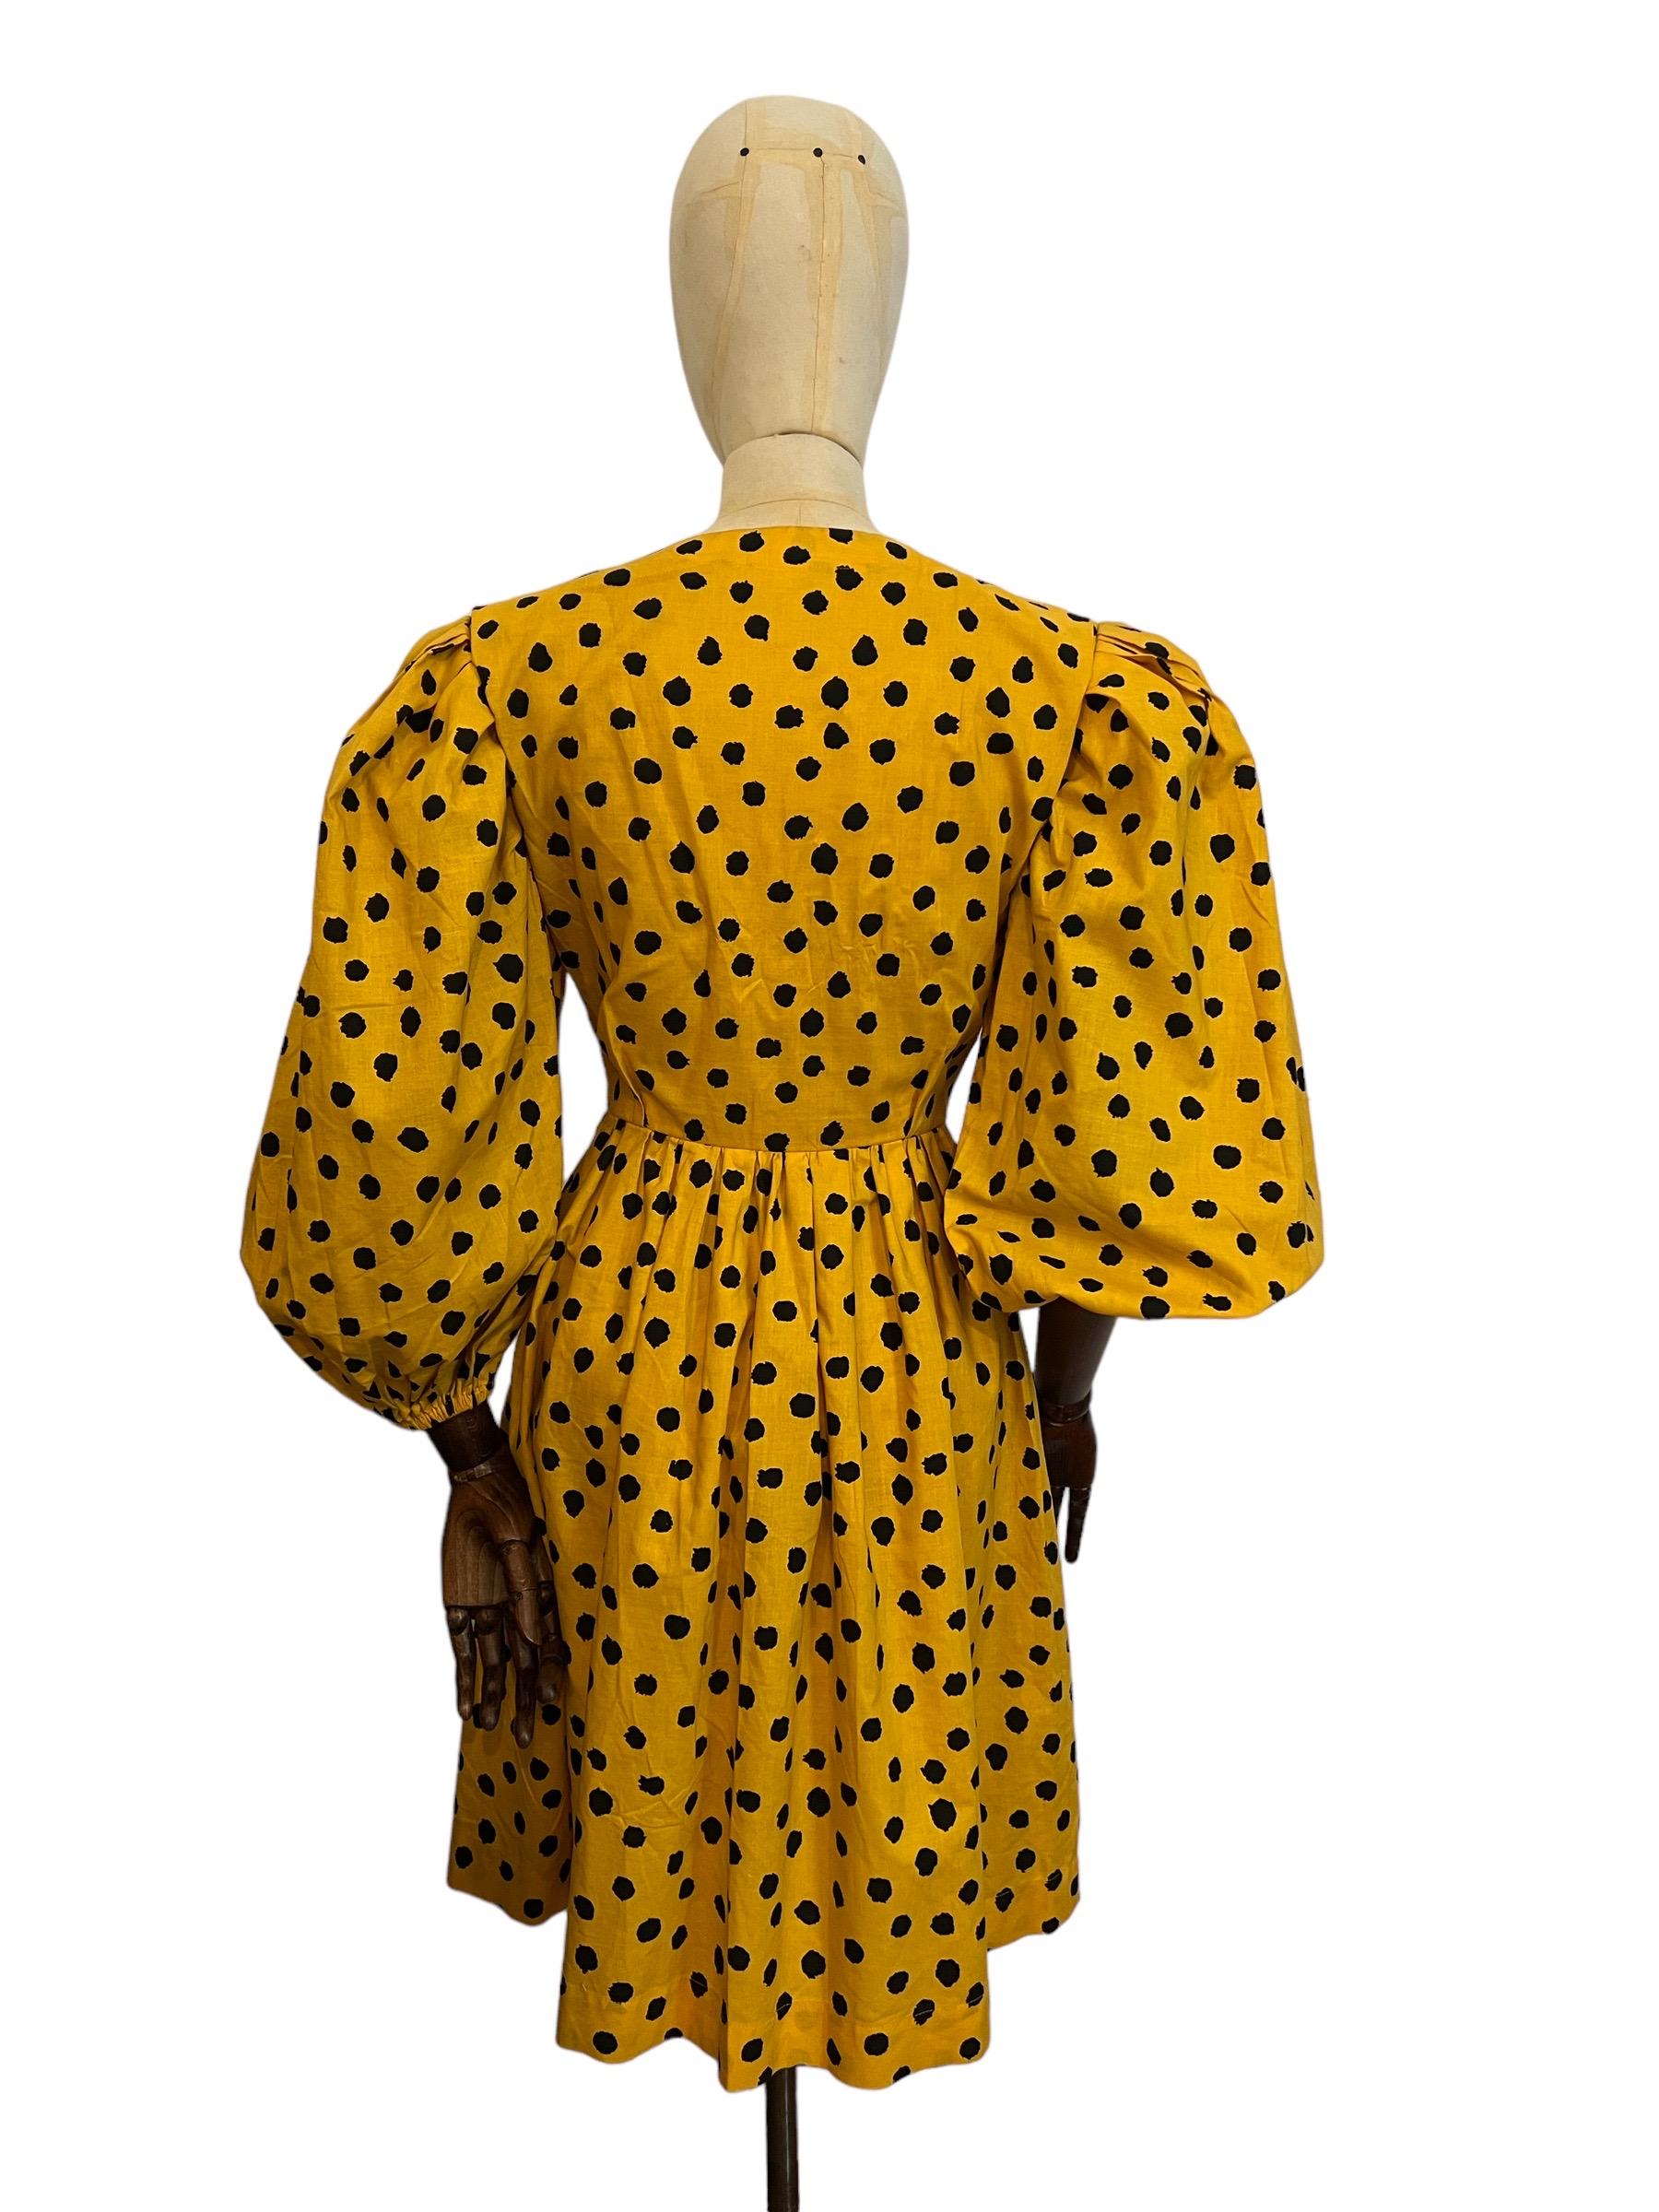 Vintage Yves Saint Laurent Yellow and Black Cotton Polka Dot Dress 5